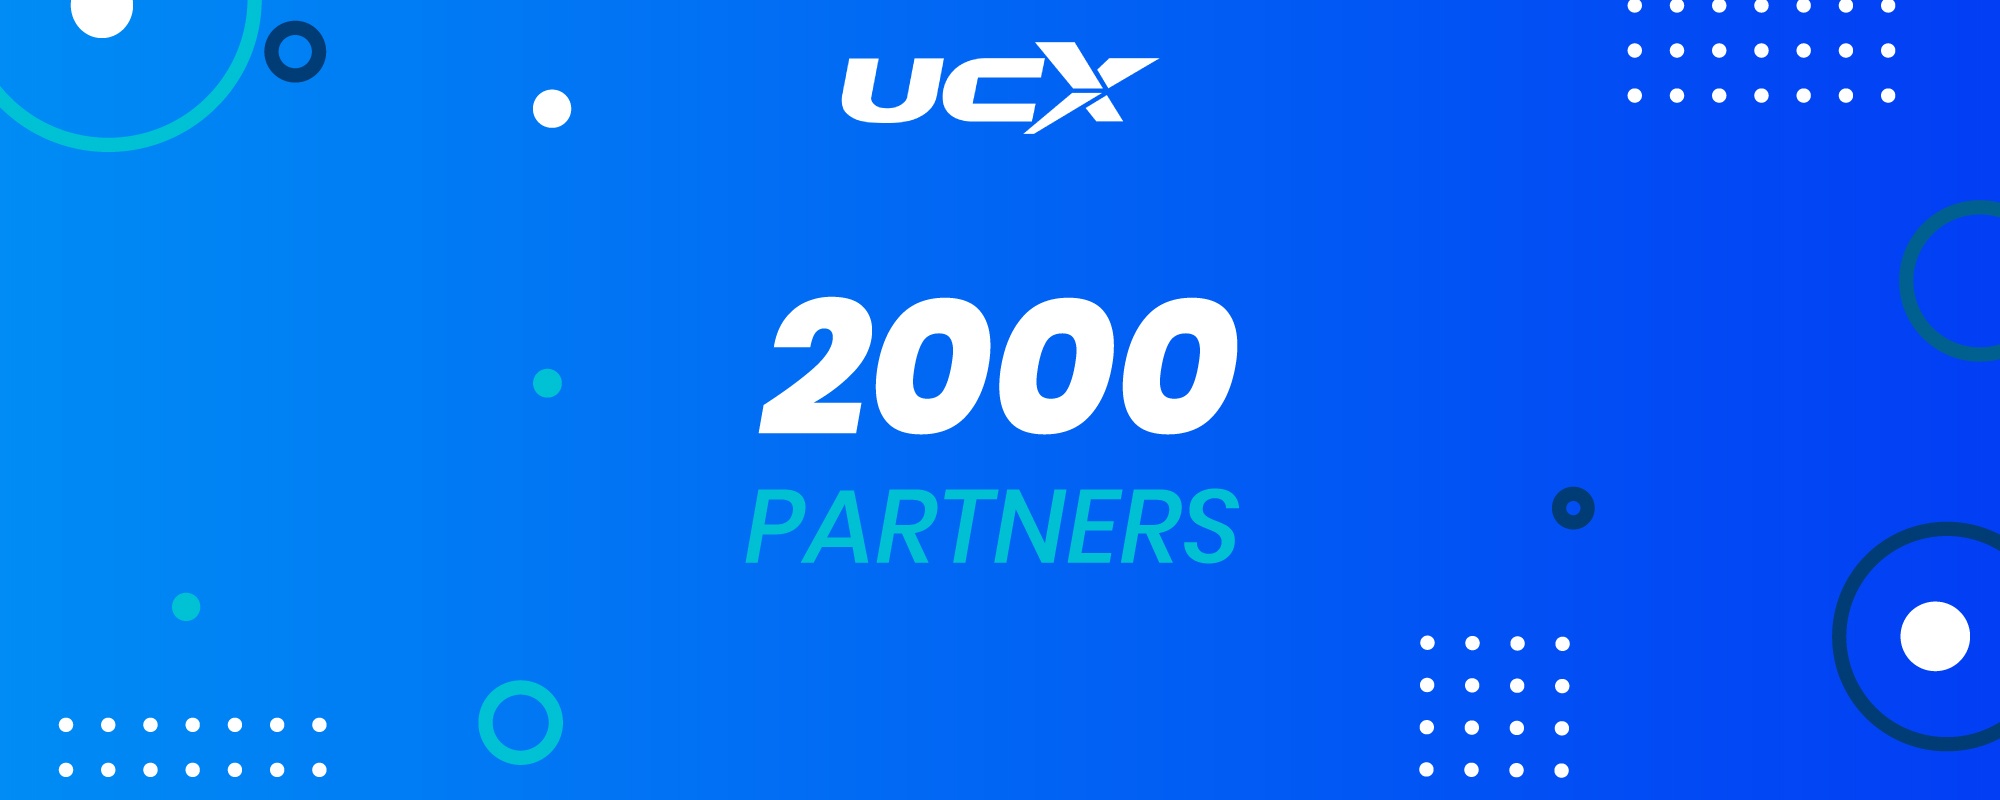 ucxmarket hit 2000 partner listings